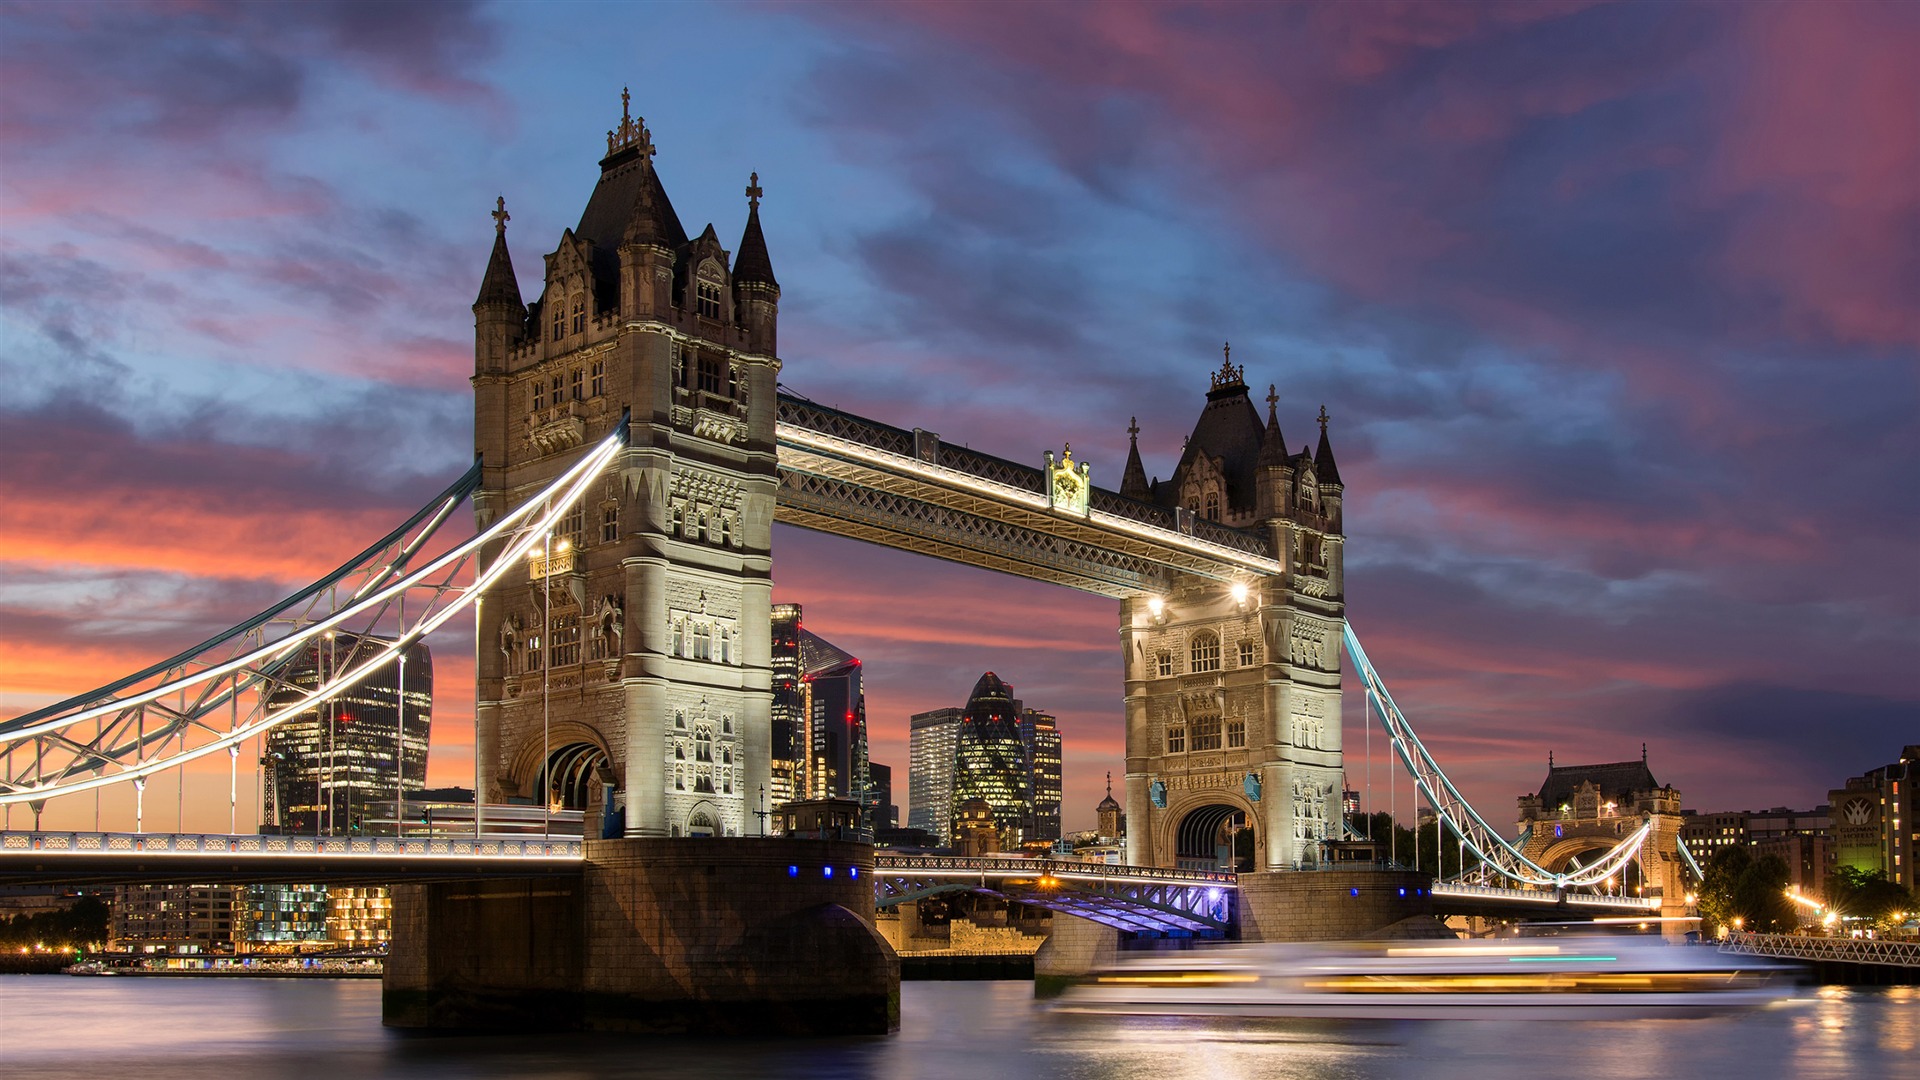 London Tower Bridge Sunset Night Lighting